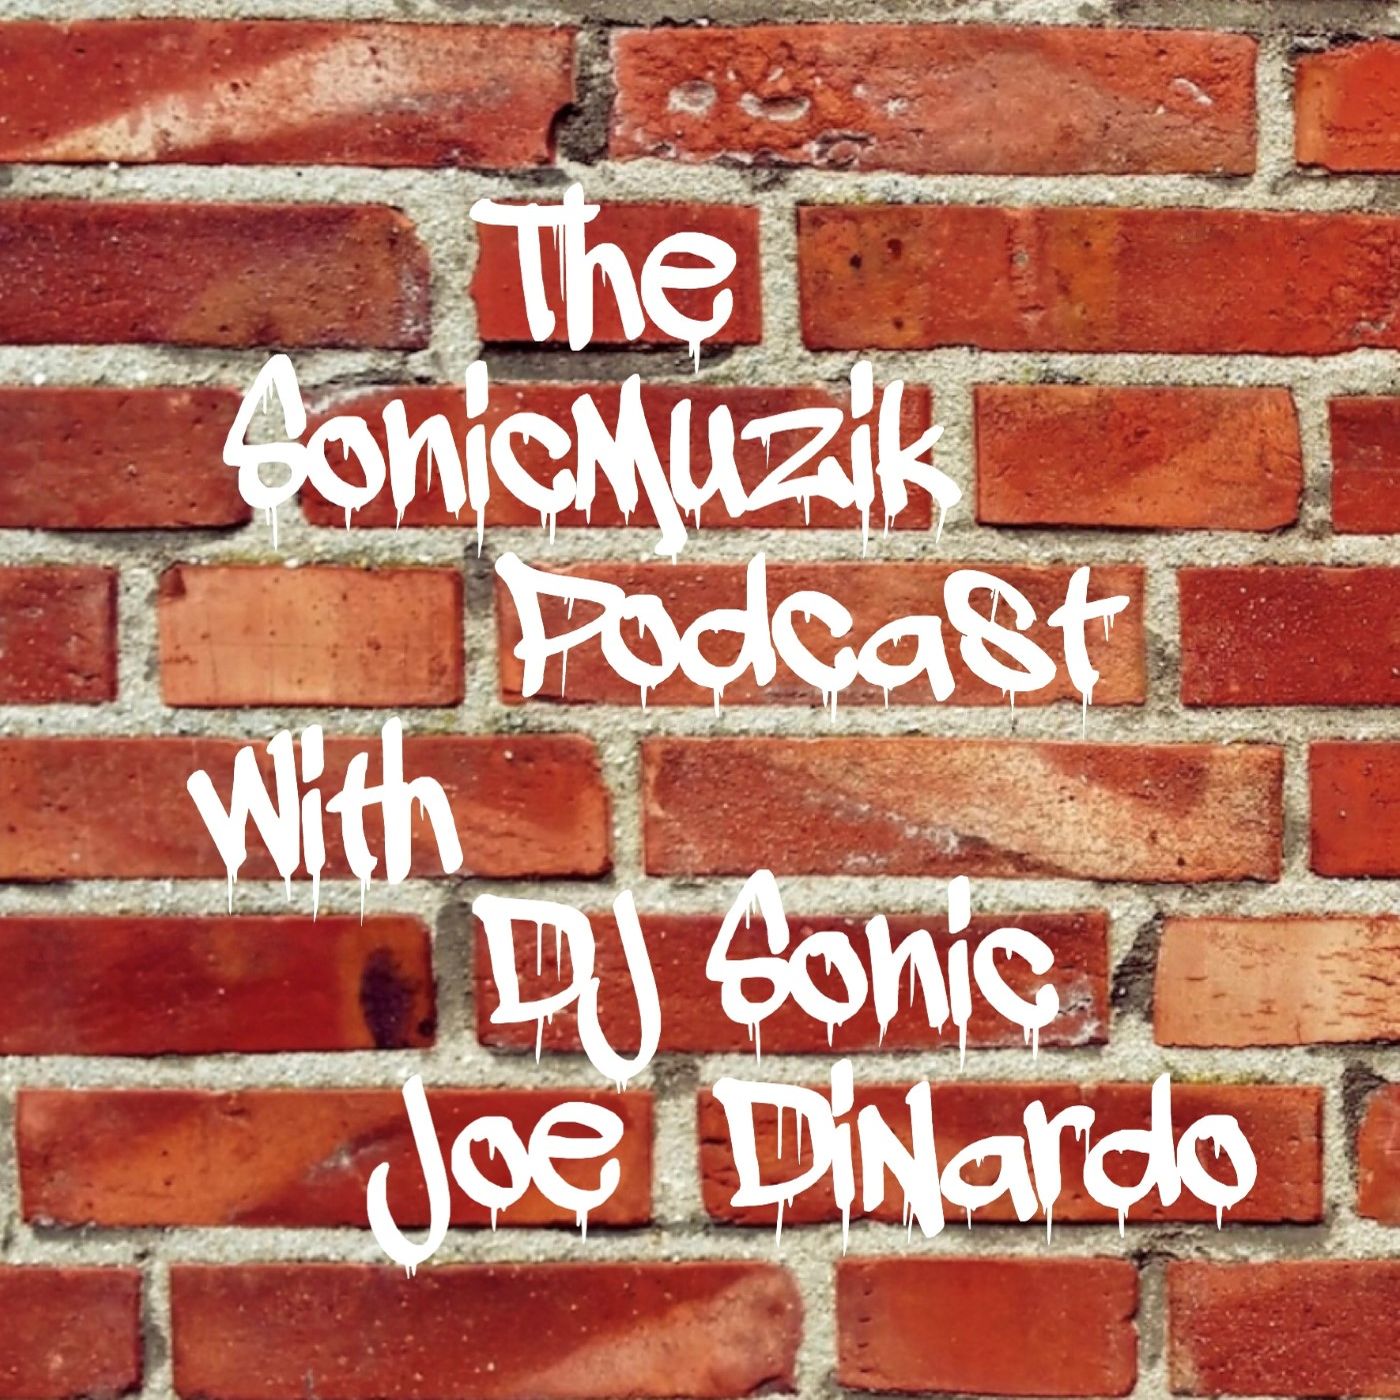 The SonicMuzik Podcast